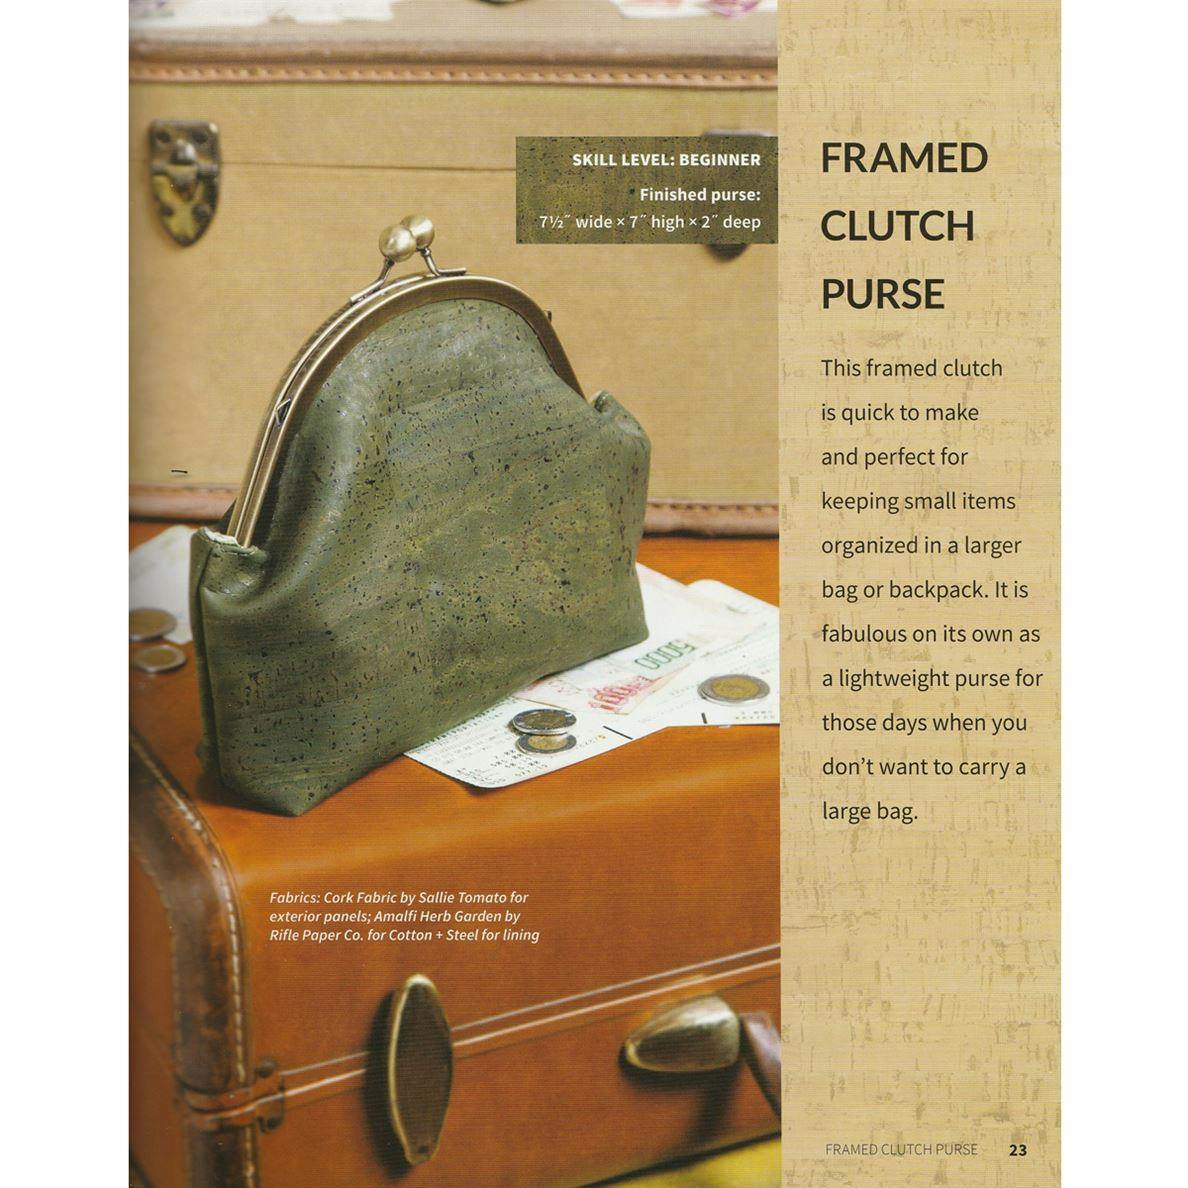 Framed clutch purse with antique gold frame